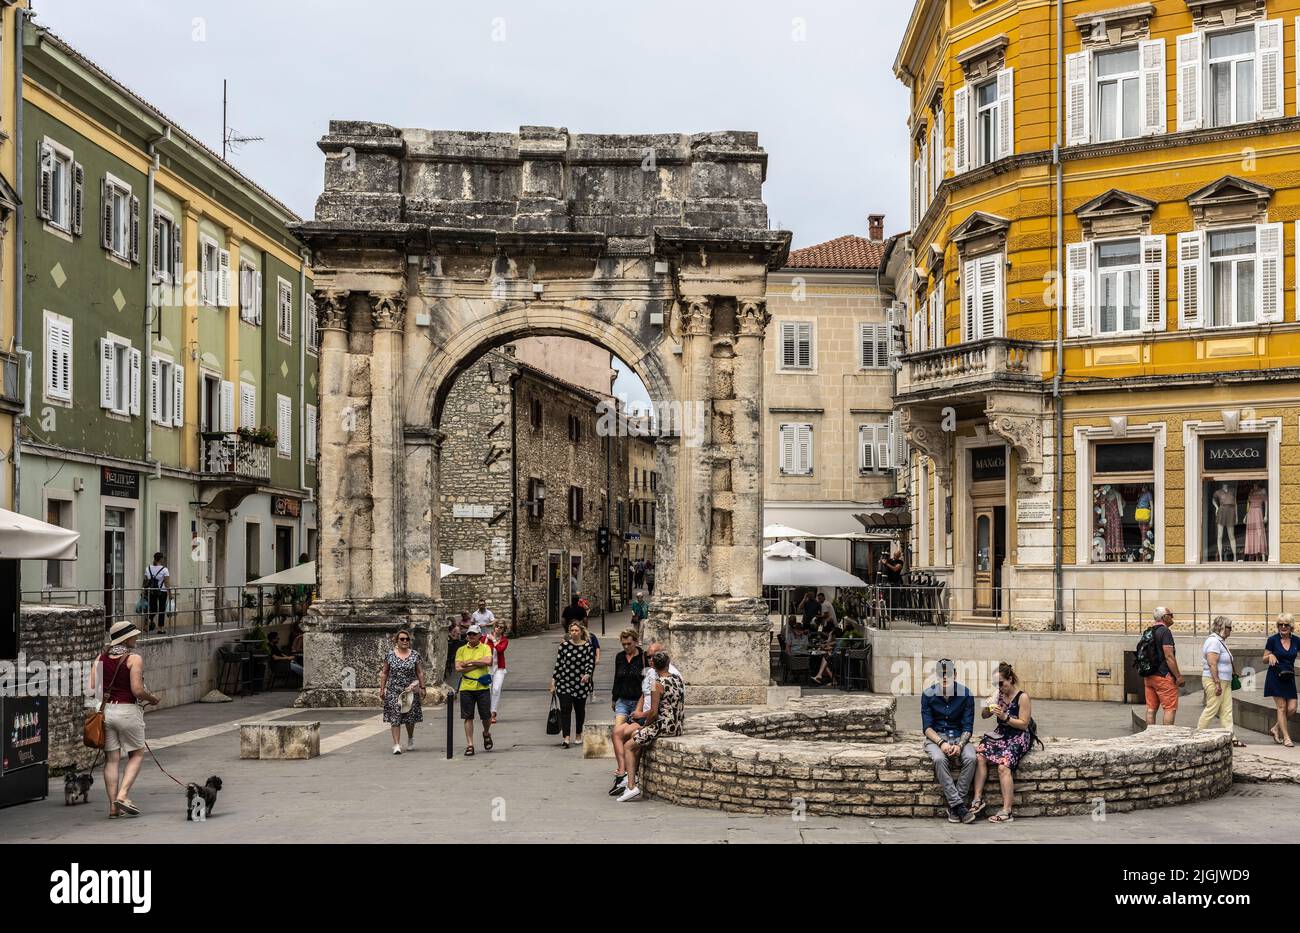 Arch of the Sergii with Strain Gauge Monitors, Pula, Croatia Stock Photo